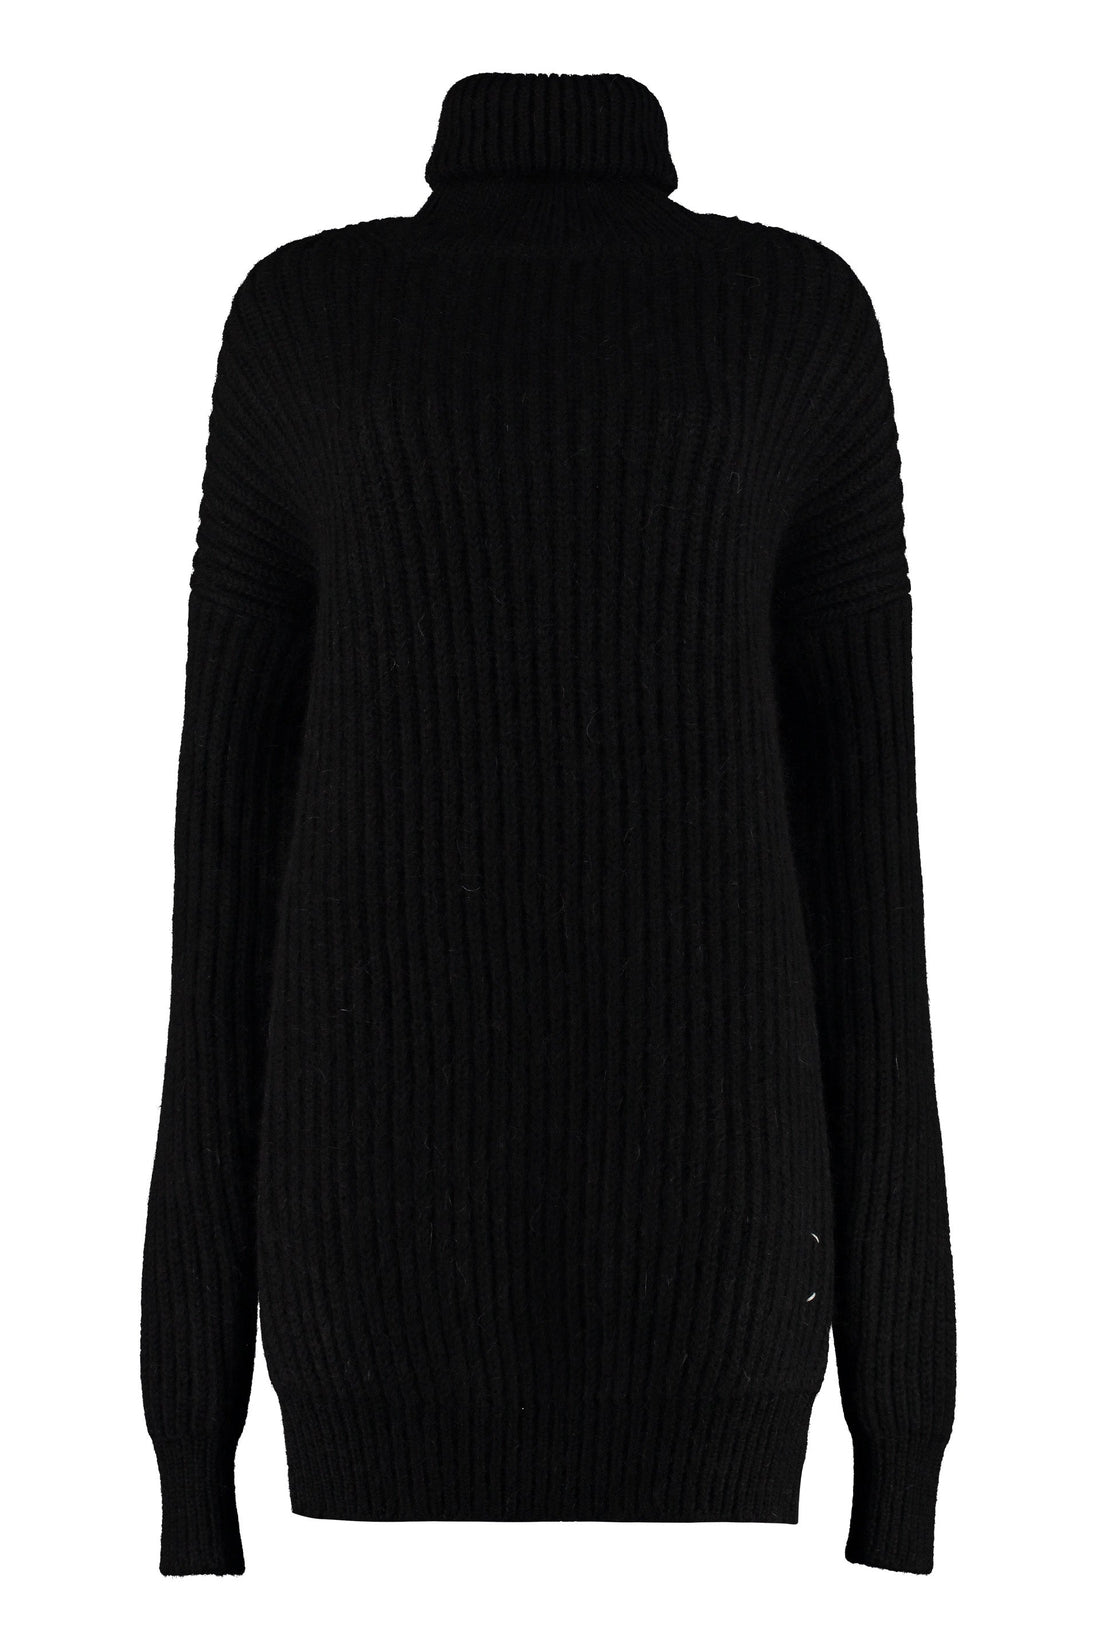 Maison Margiela-OUTLET-SALE-Ribbed oversize sweater-ARCHIVIST